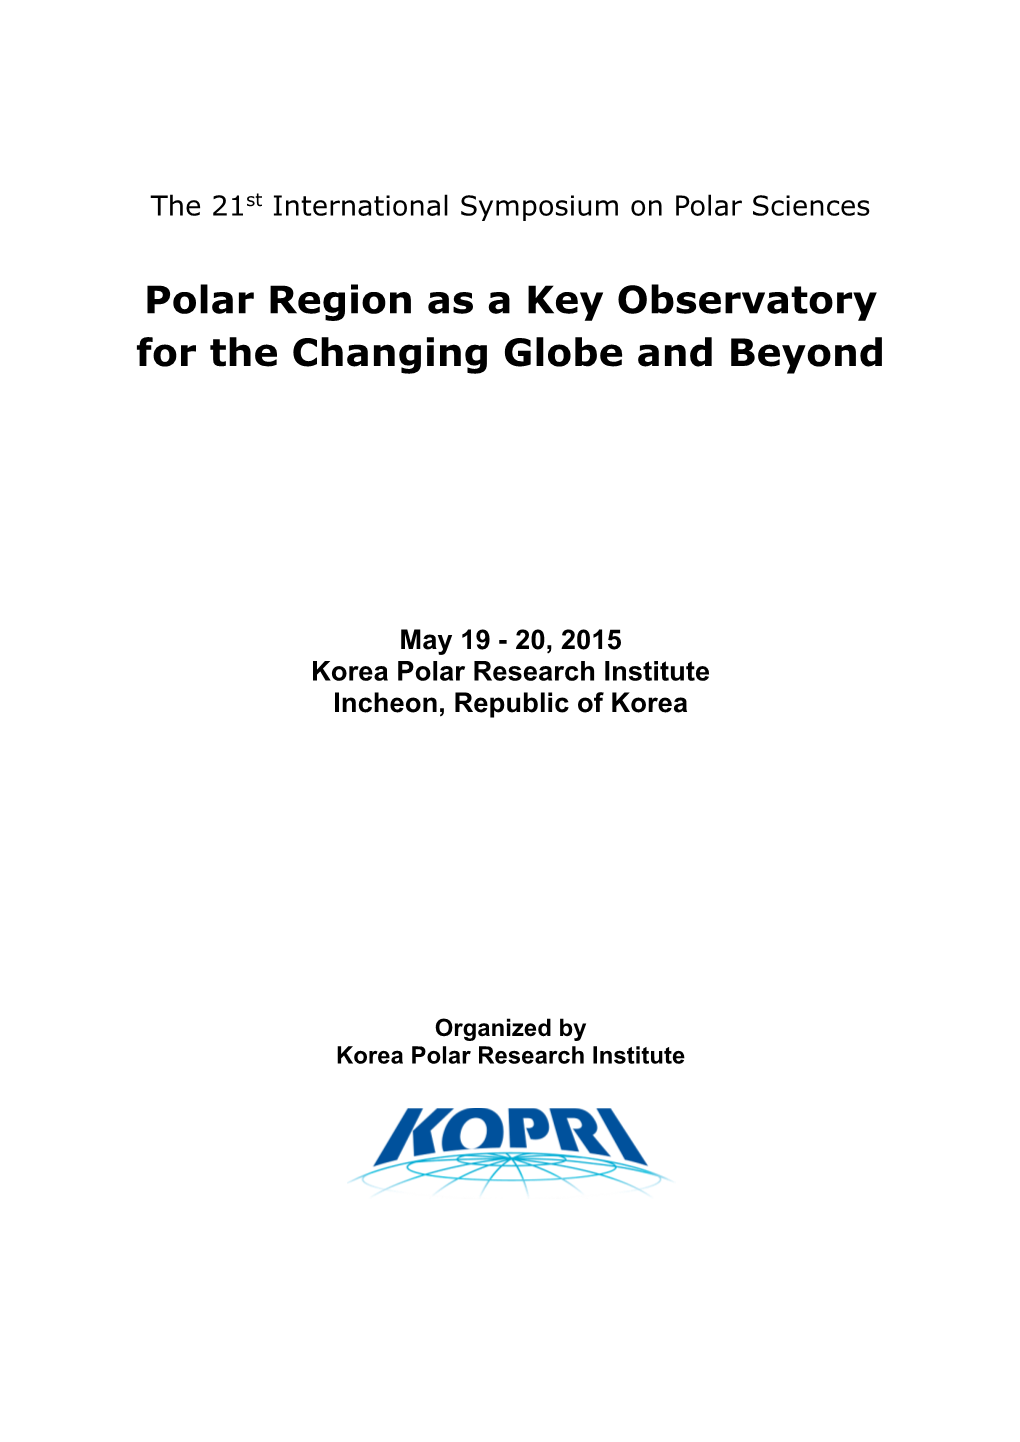 The 18Th International Symposium on Polar Sciences